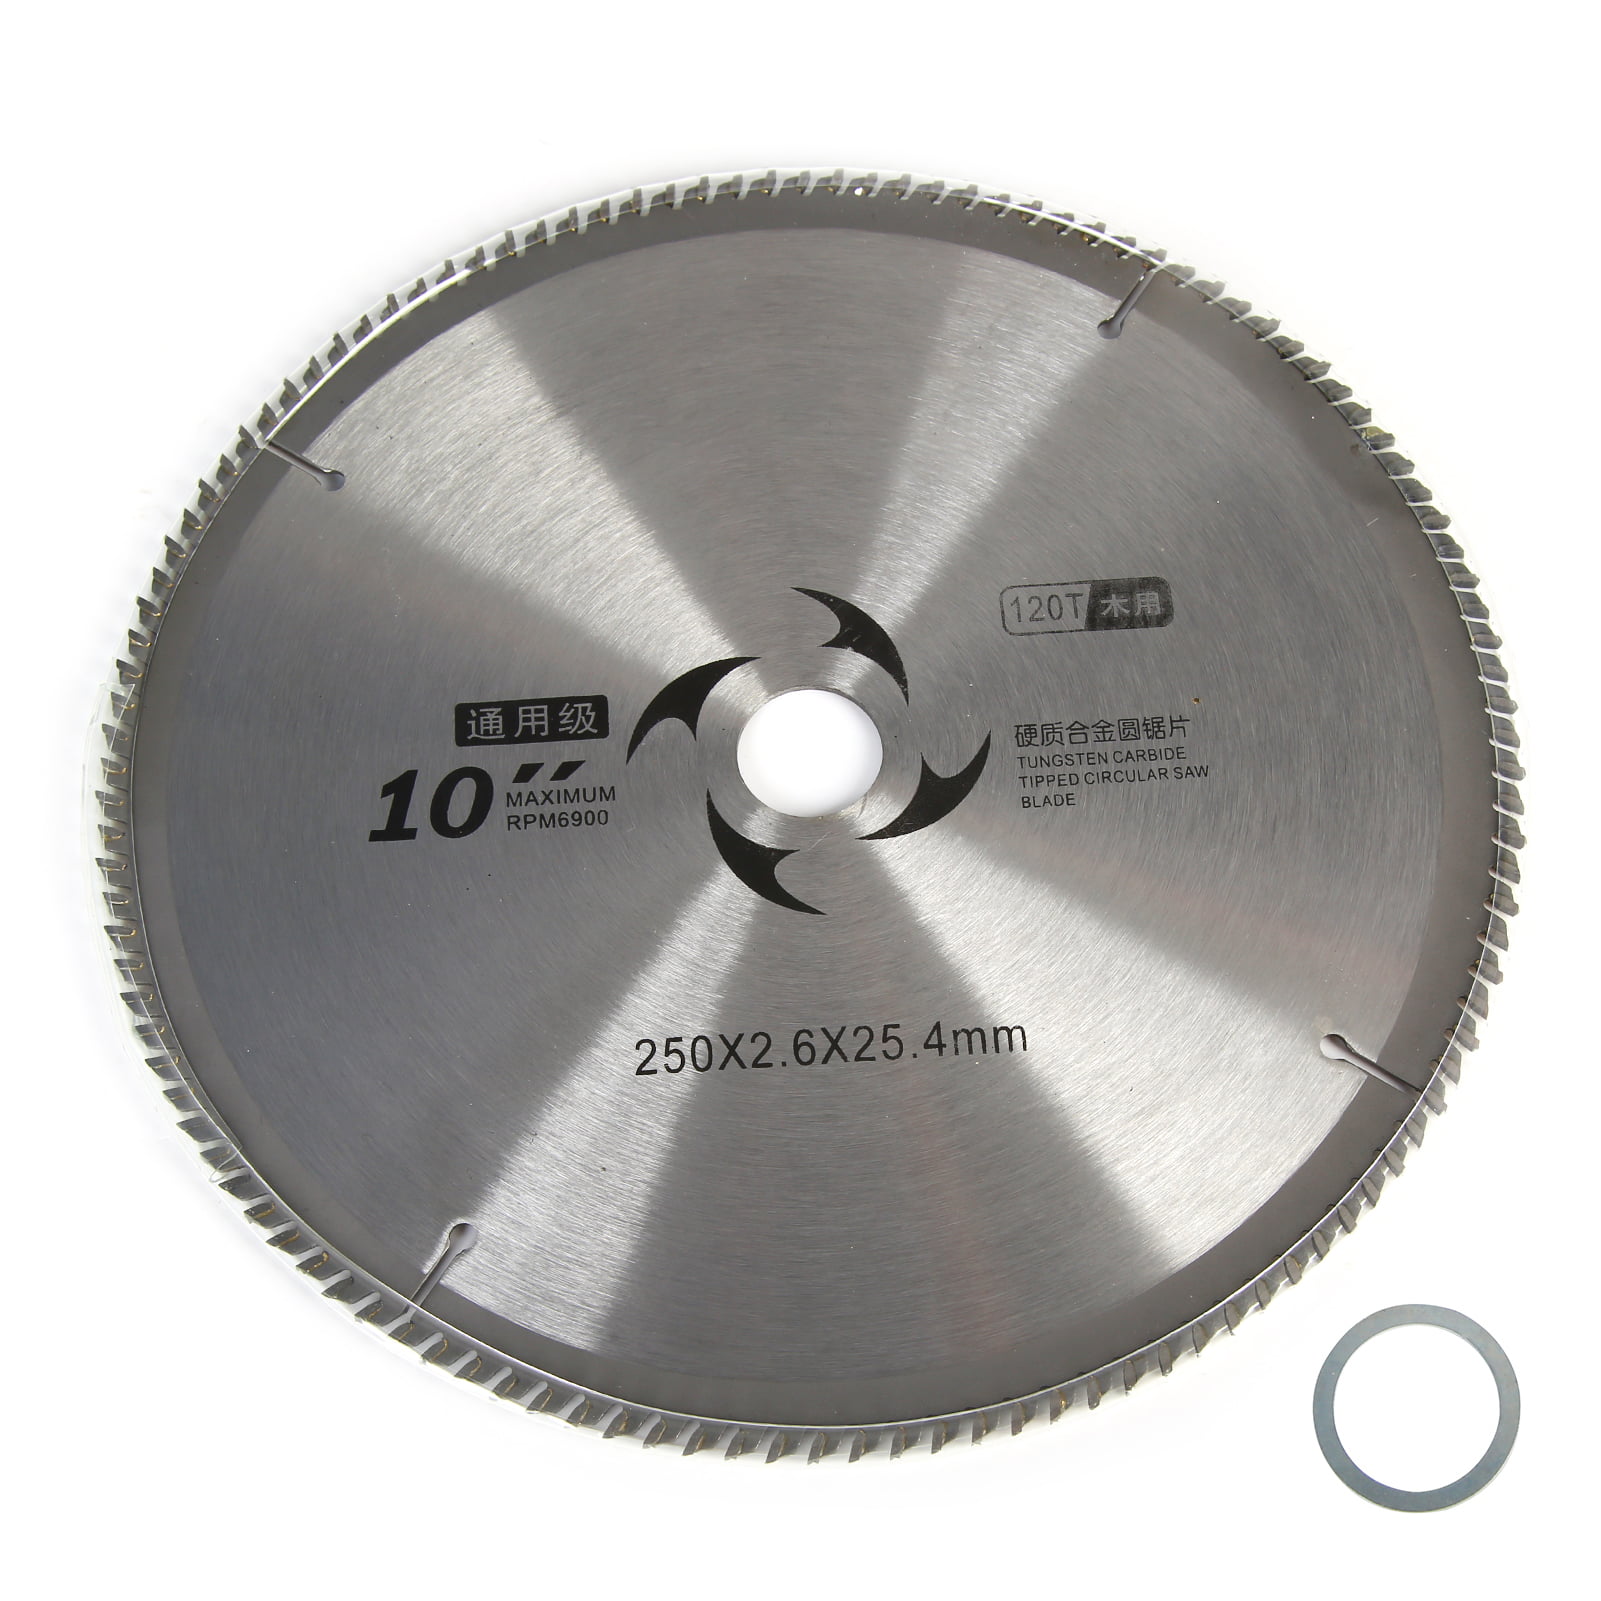 10" High Quality Carbide Circular Saw Blade Cut Off Disc For Cutting Wood 120T 